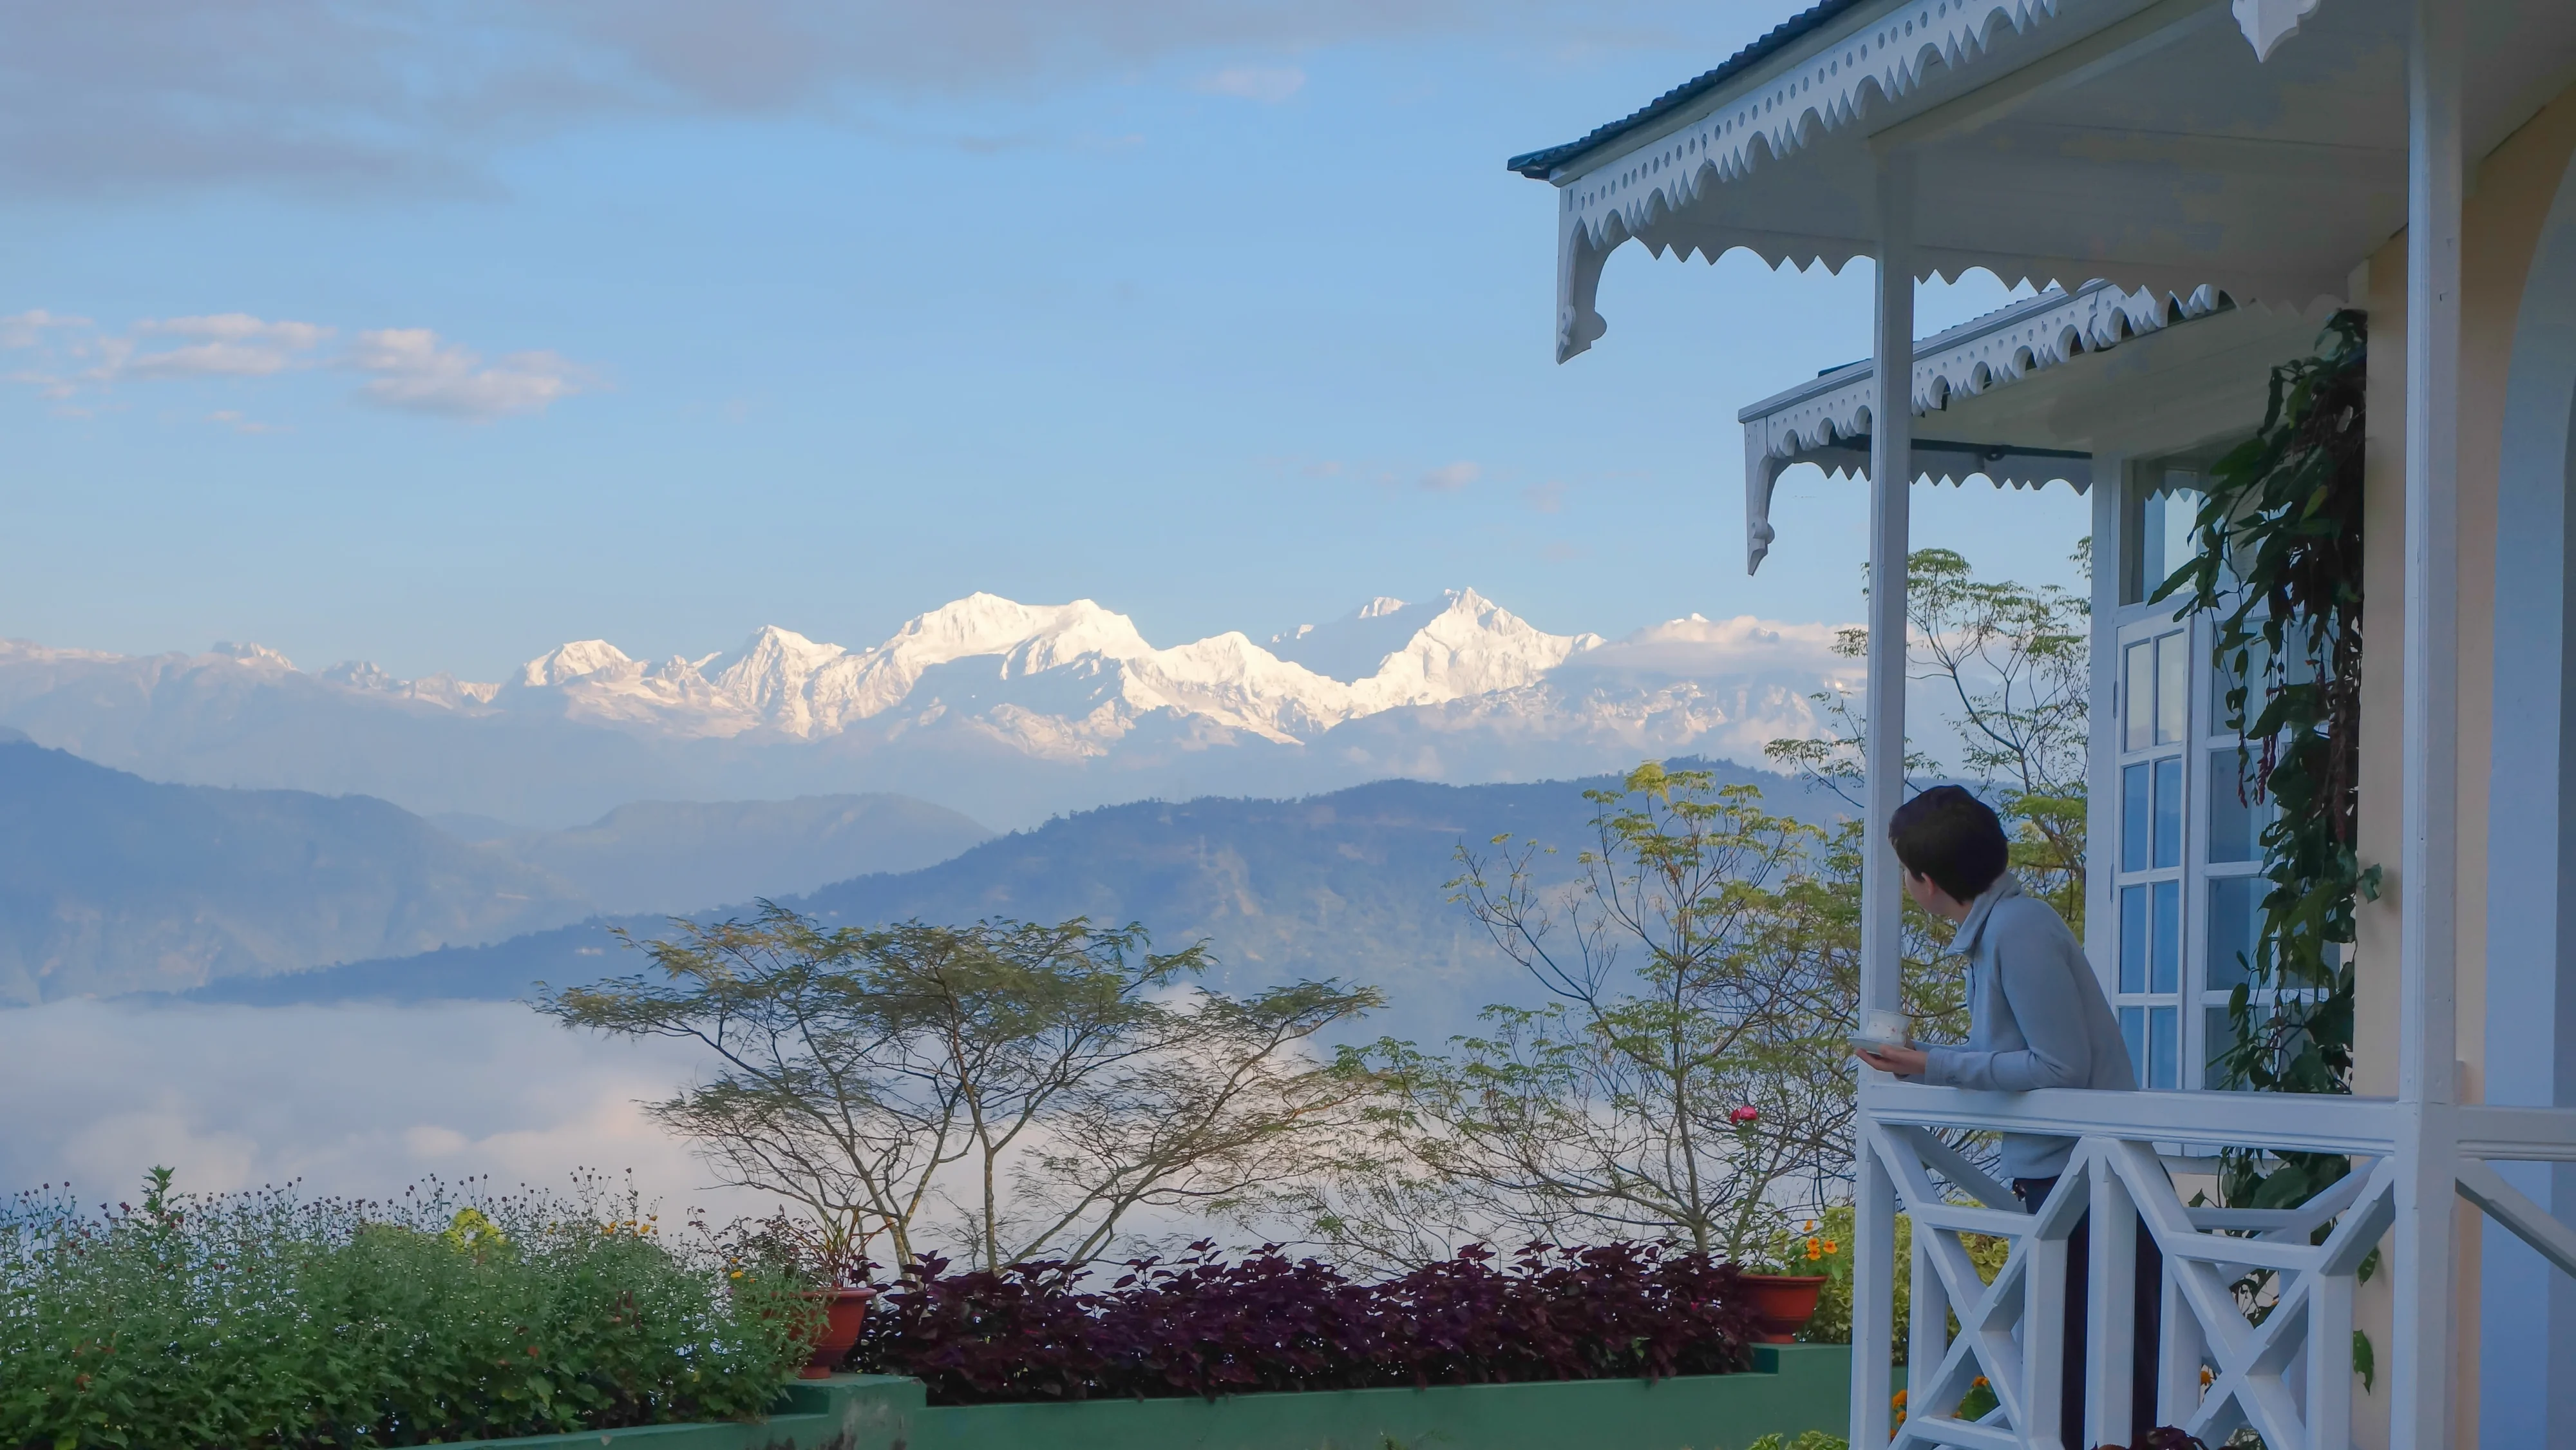 Morning view from Glenburn Estate [Image via Travel Journalist, Subhasish Chakraborty].